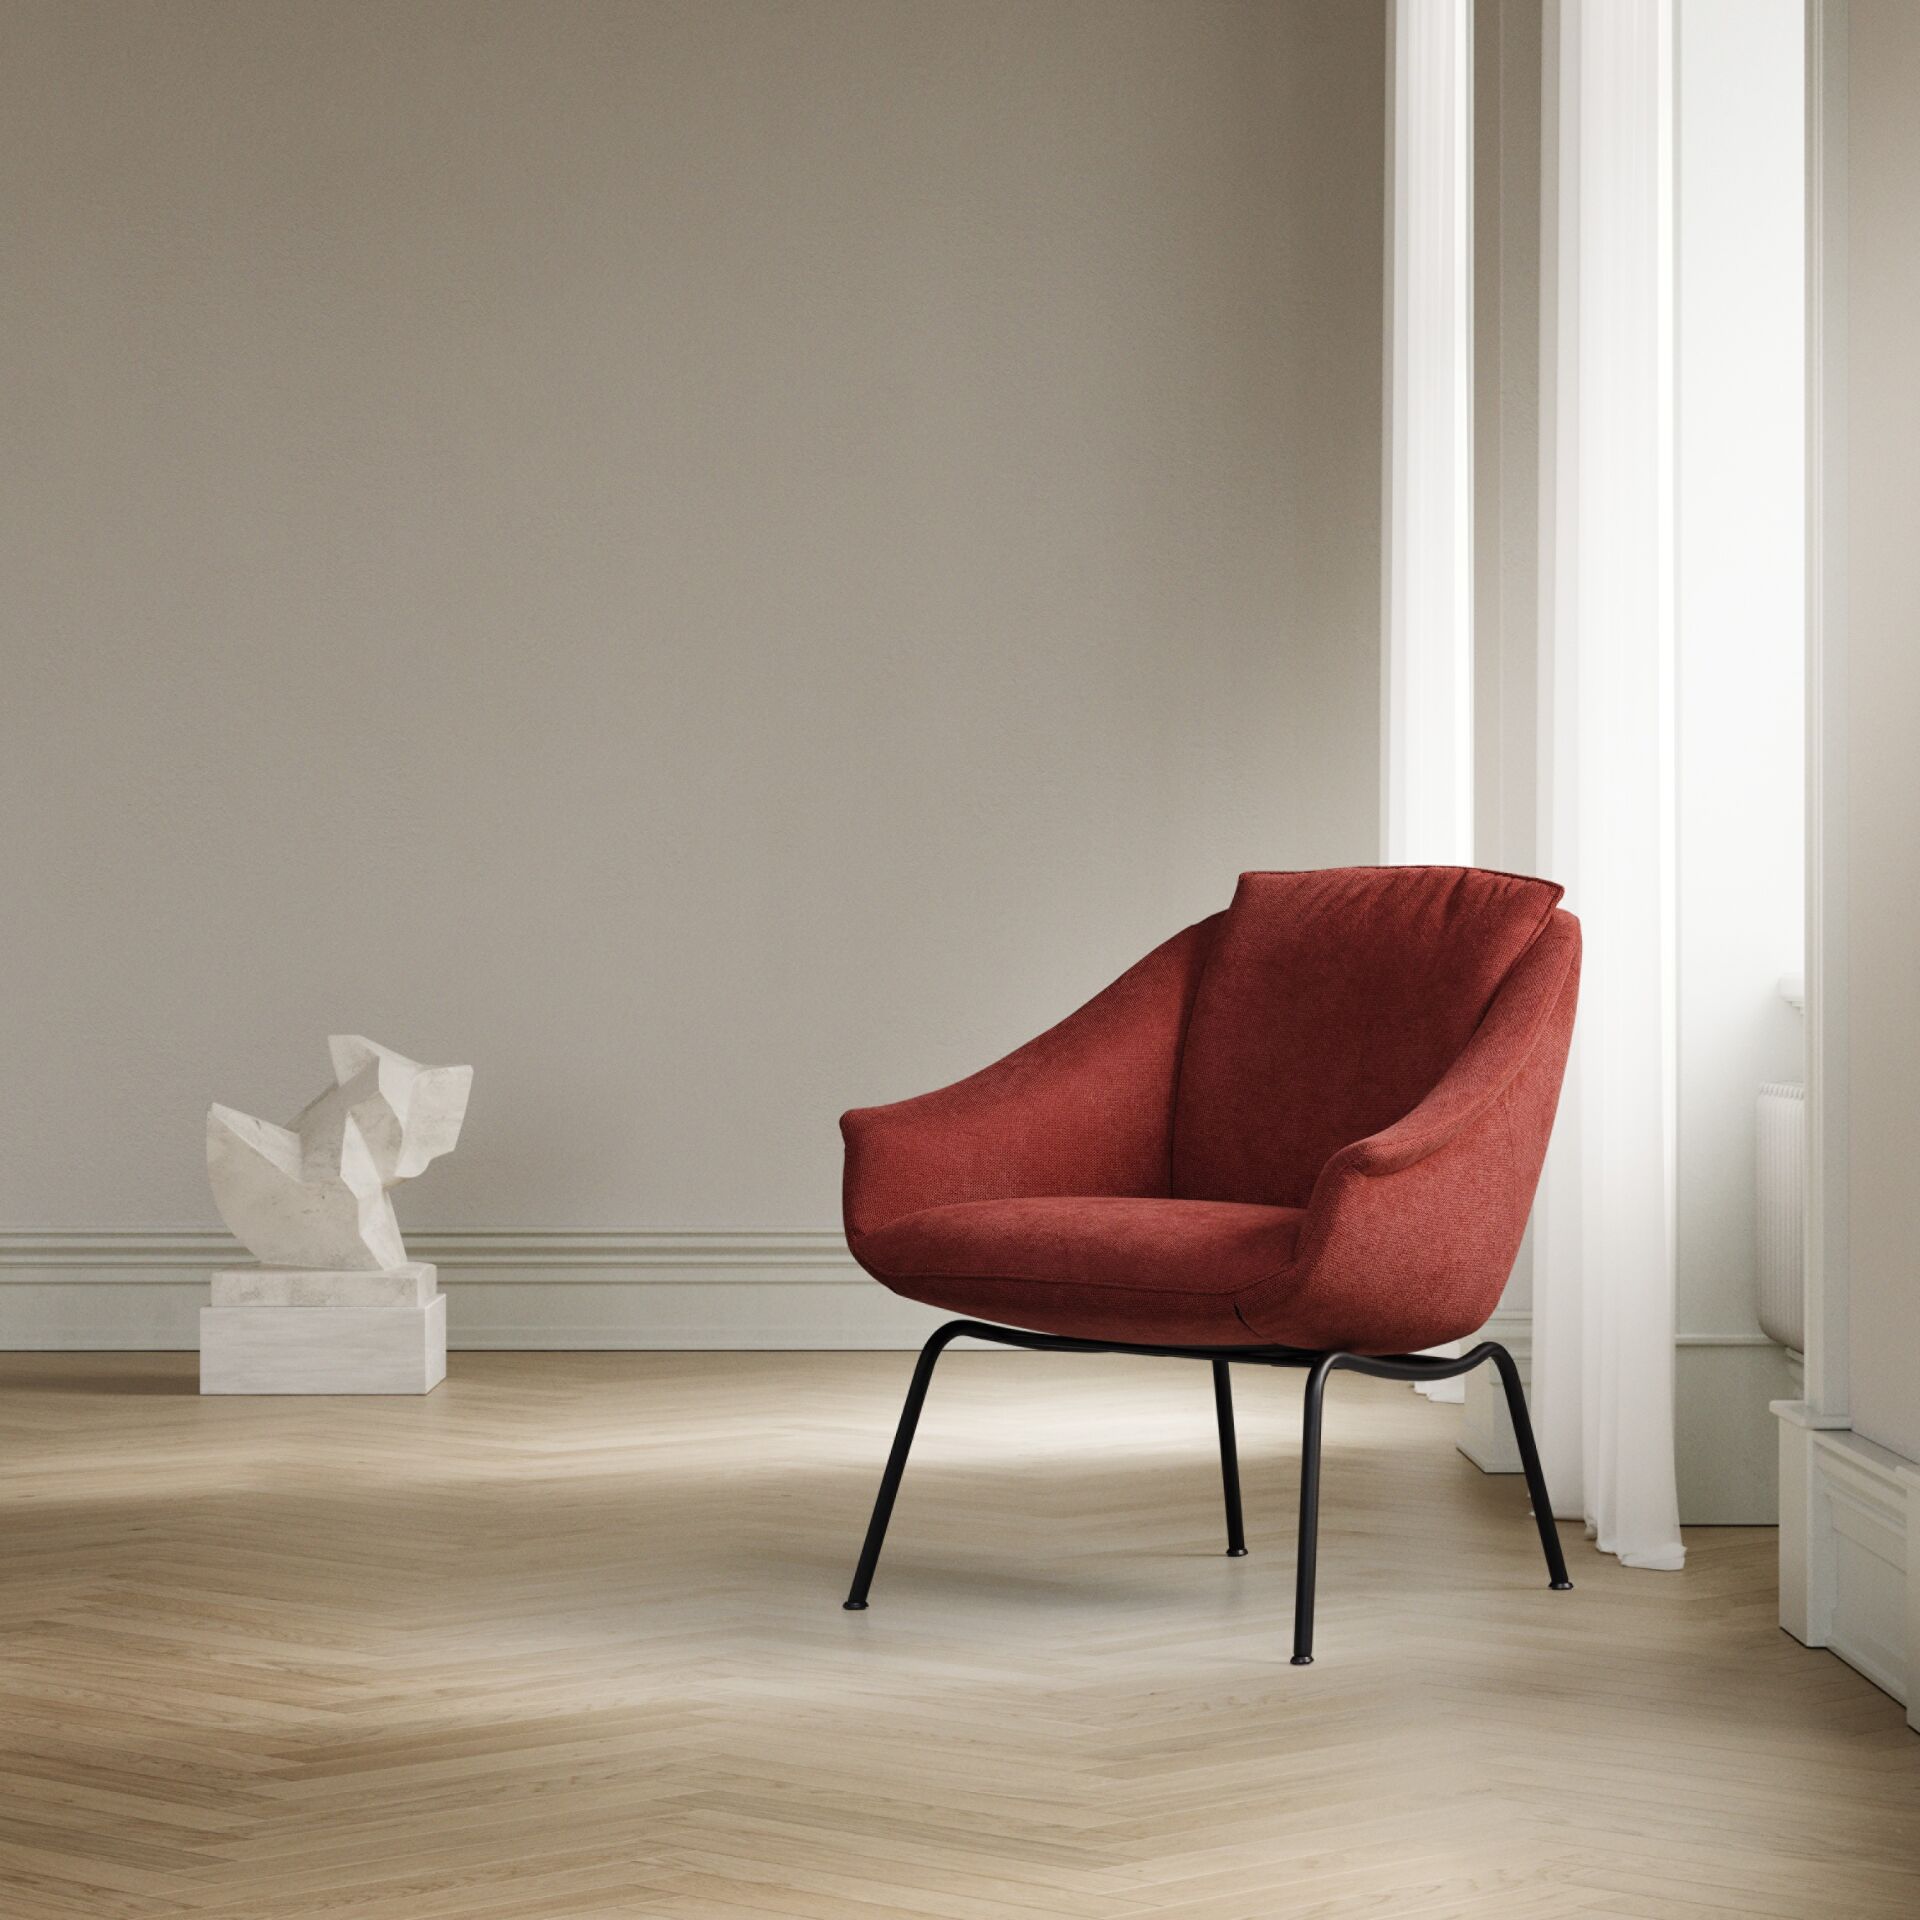 Topform fauteuil Cincin in rood Home Center Wolvega 